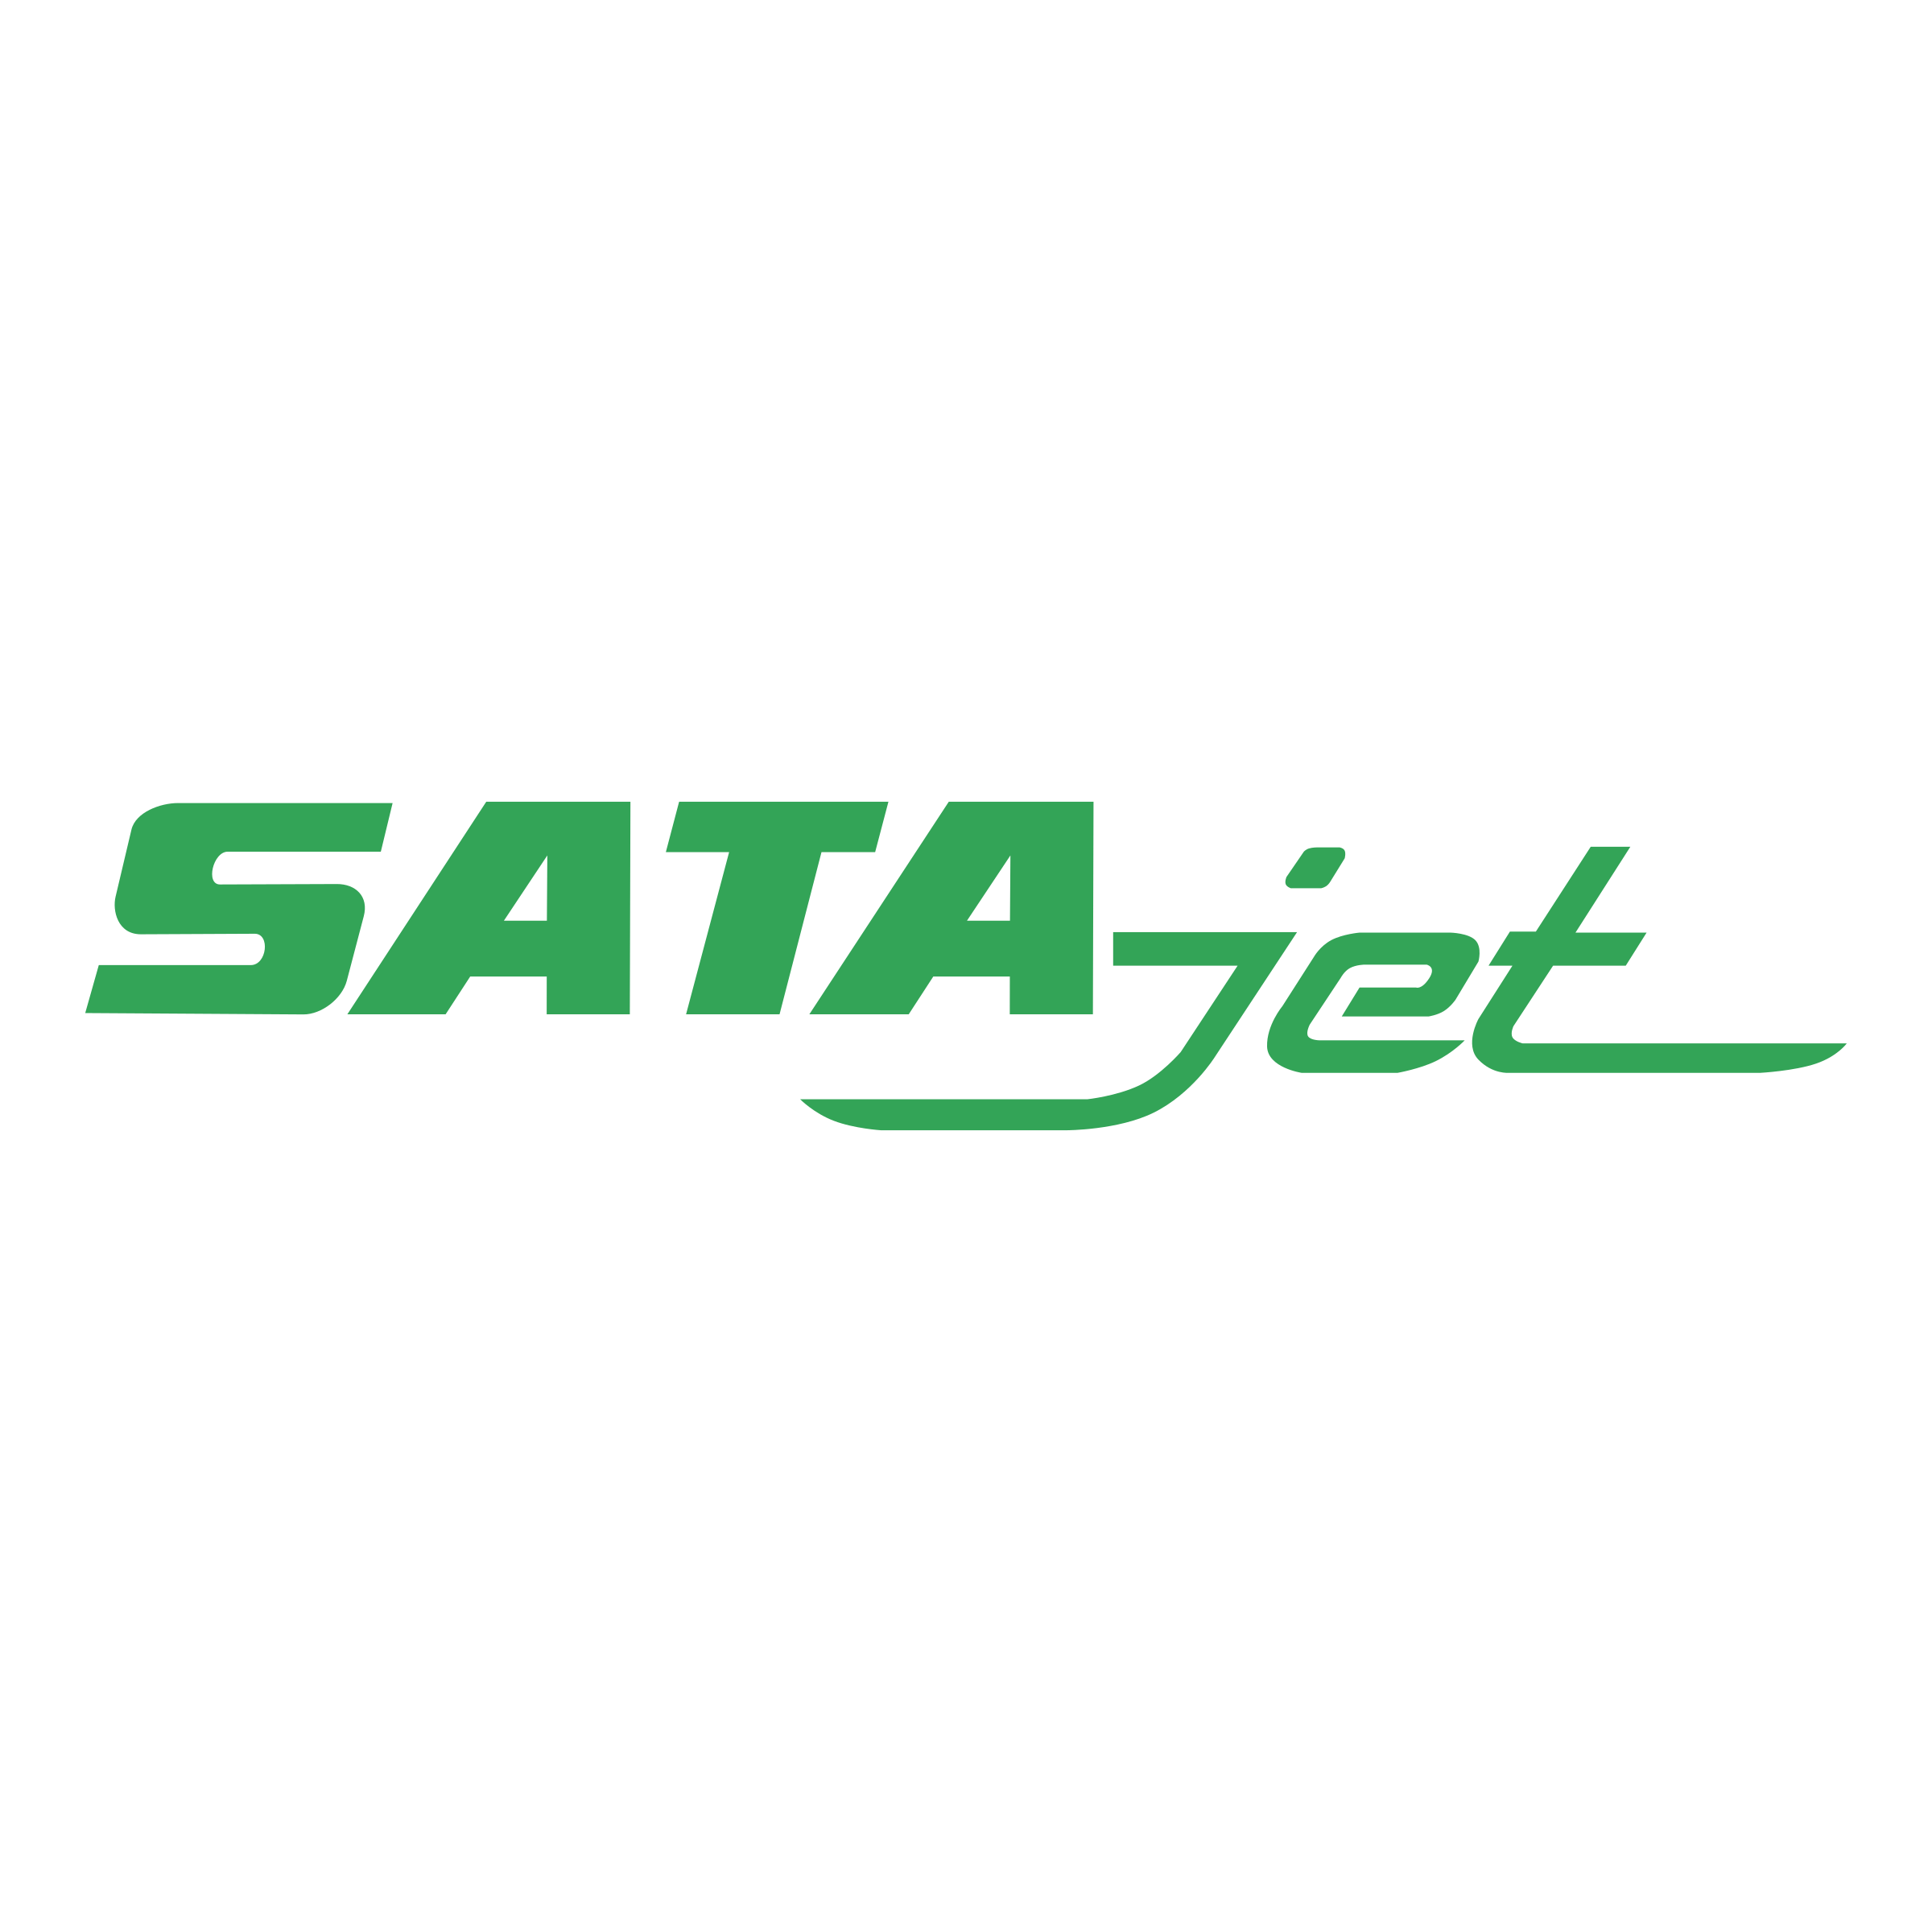 SATA Logo - Sata Jet Logo PNG Transparent & SVG Vector